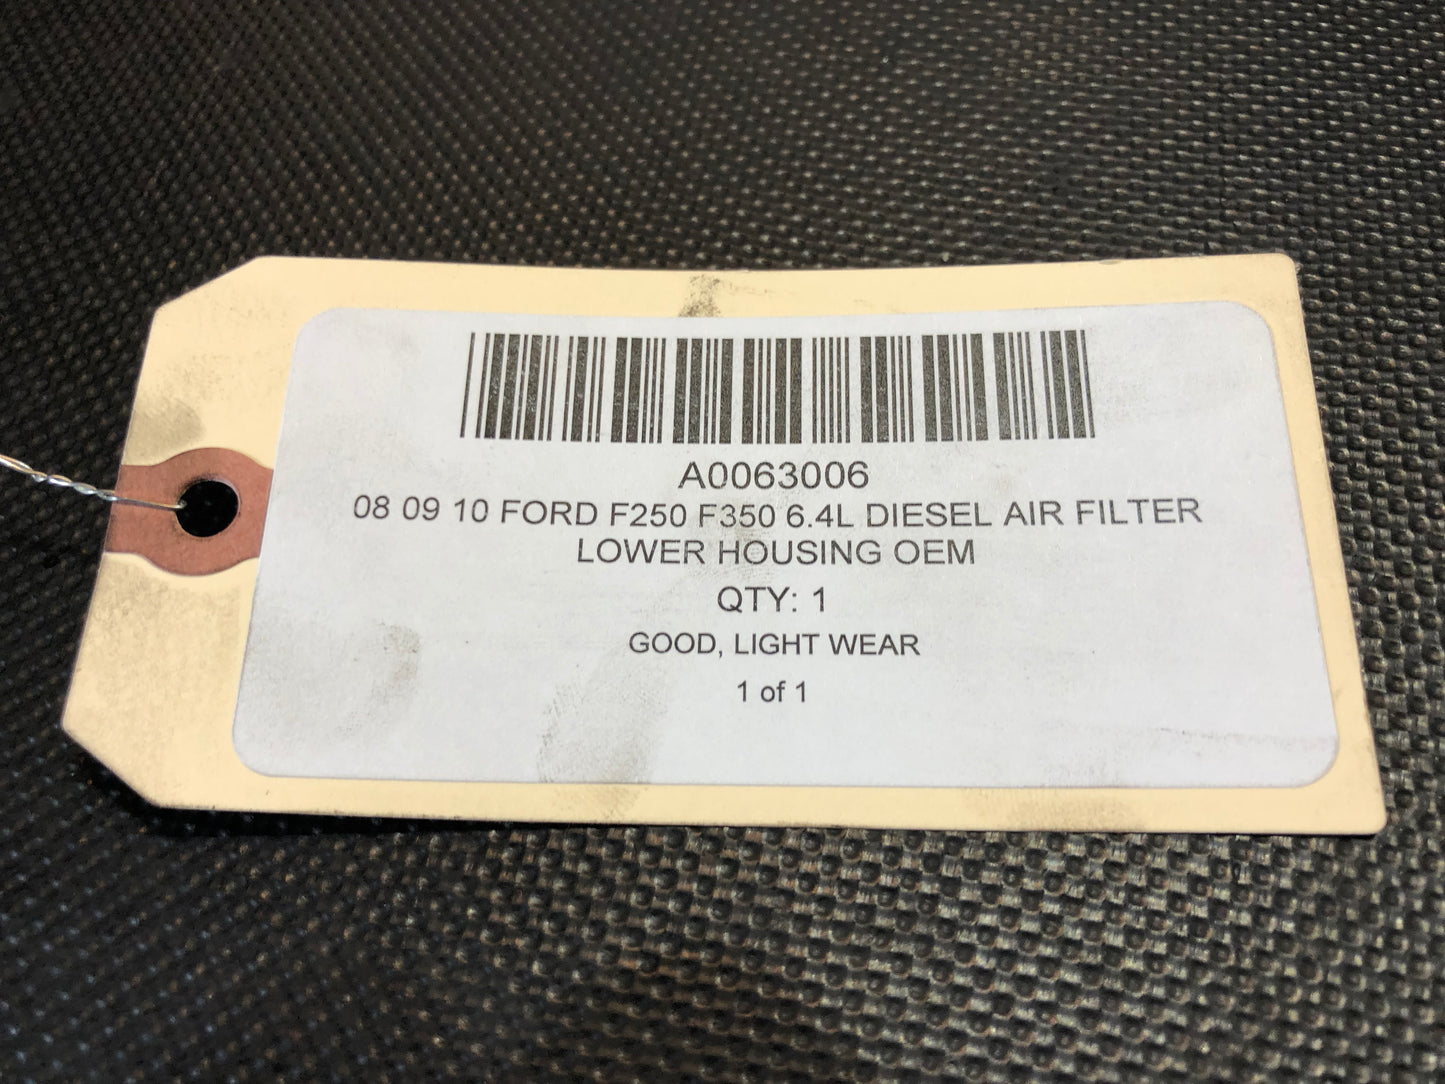 08 09 10 Ford F250 F350 6.4L Diesel Air Filter Lower Housing OEM